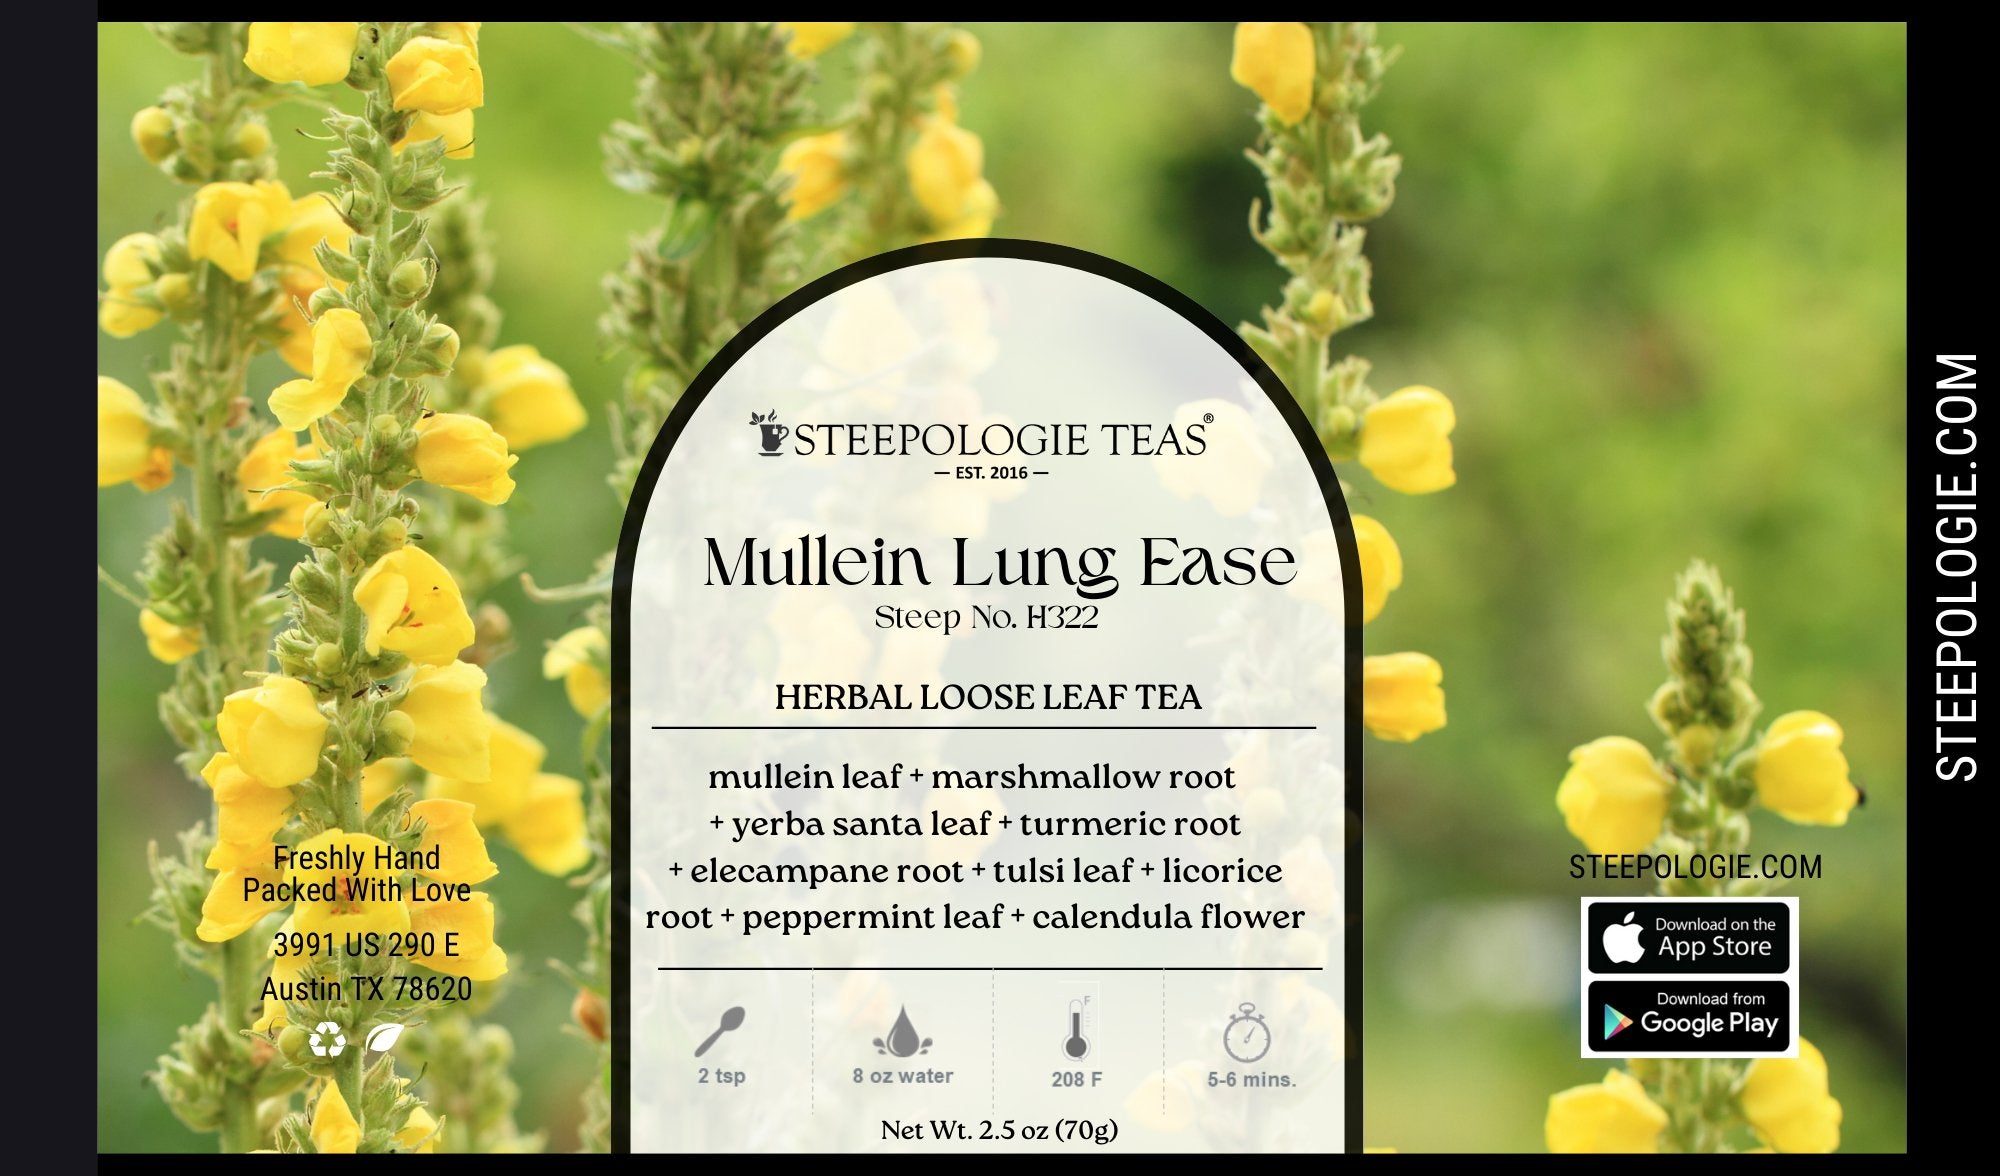 Mullein Lung Ease Tea (Steep No. H322) - Steepologie